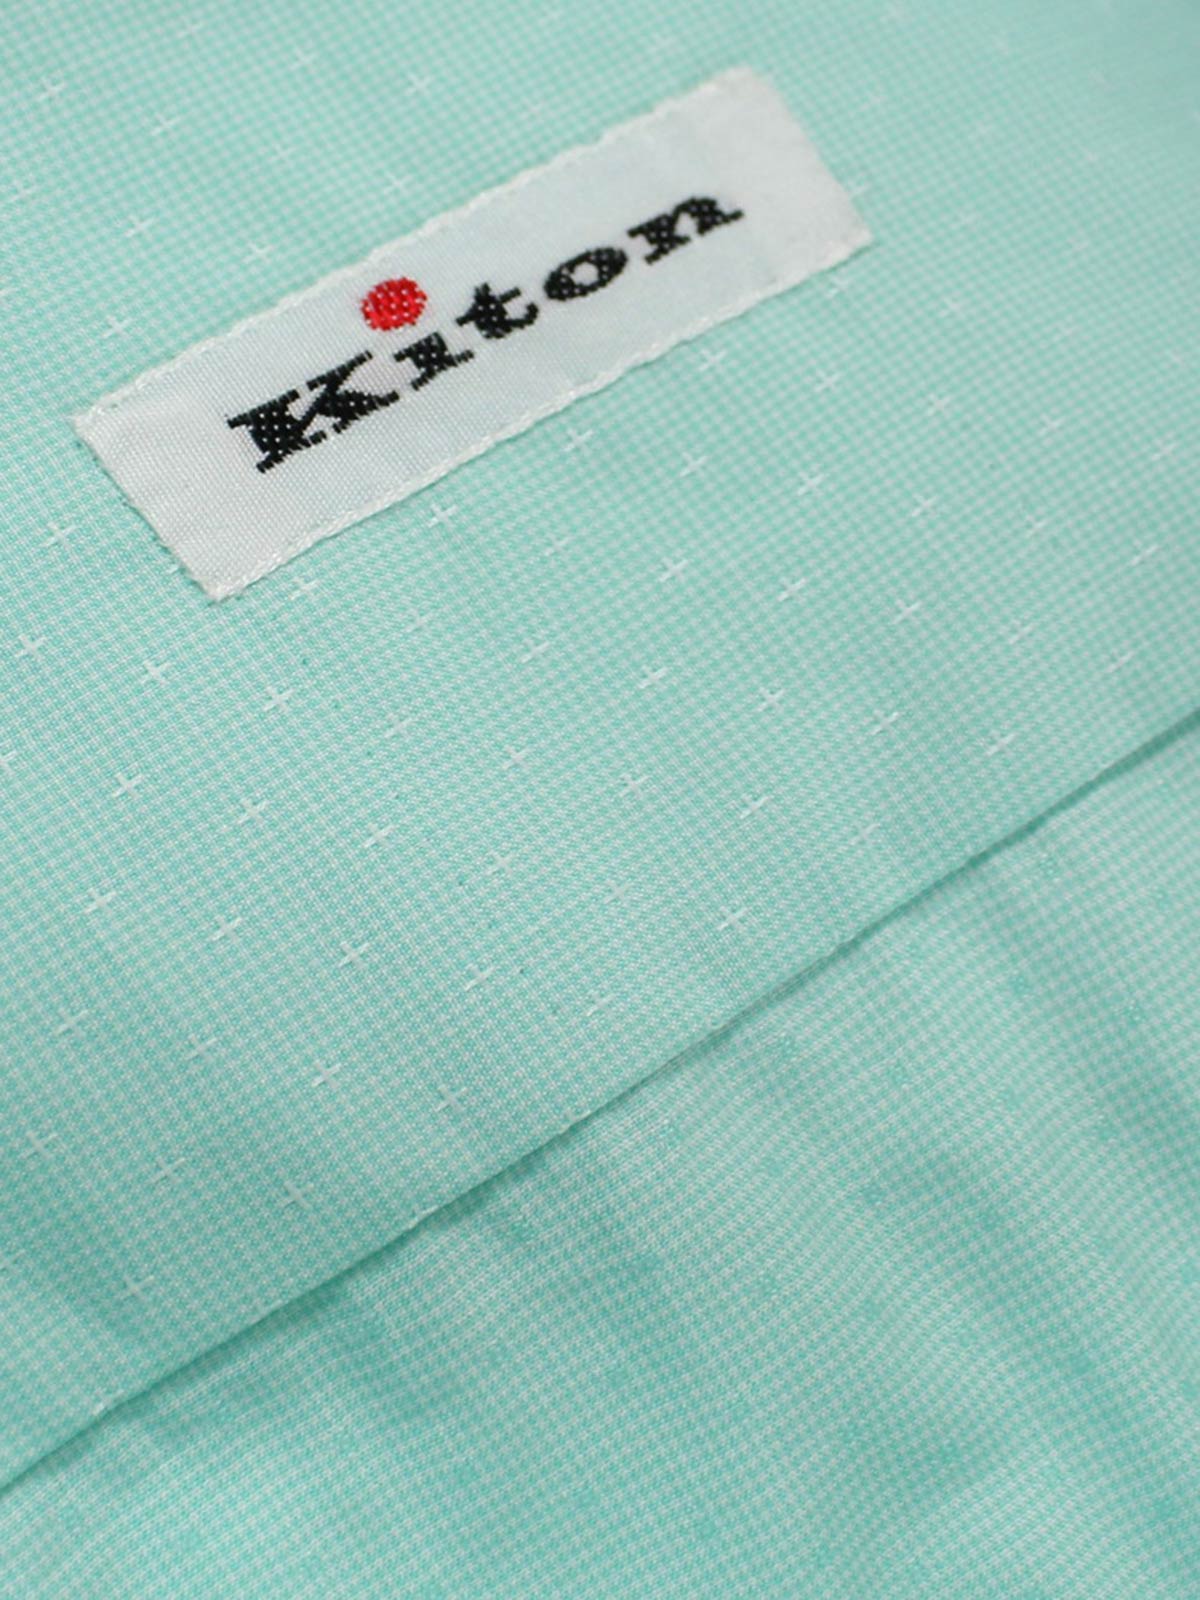 Kiton Short Sleeve Shirt Mint Green 40 - 15 3/4 REDUCED SALE